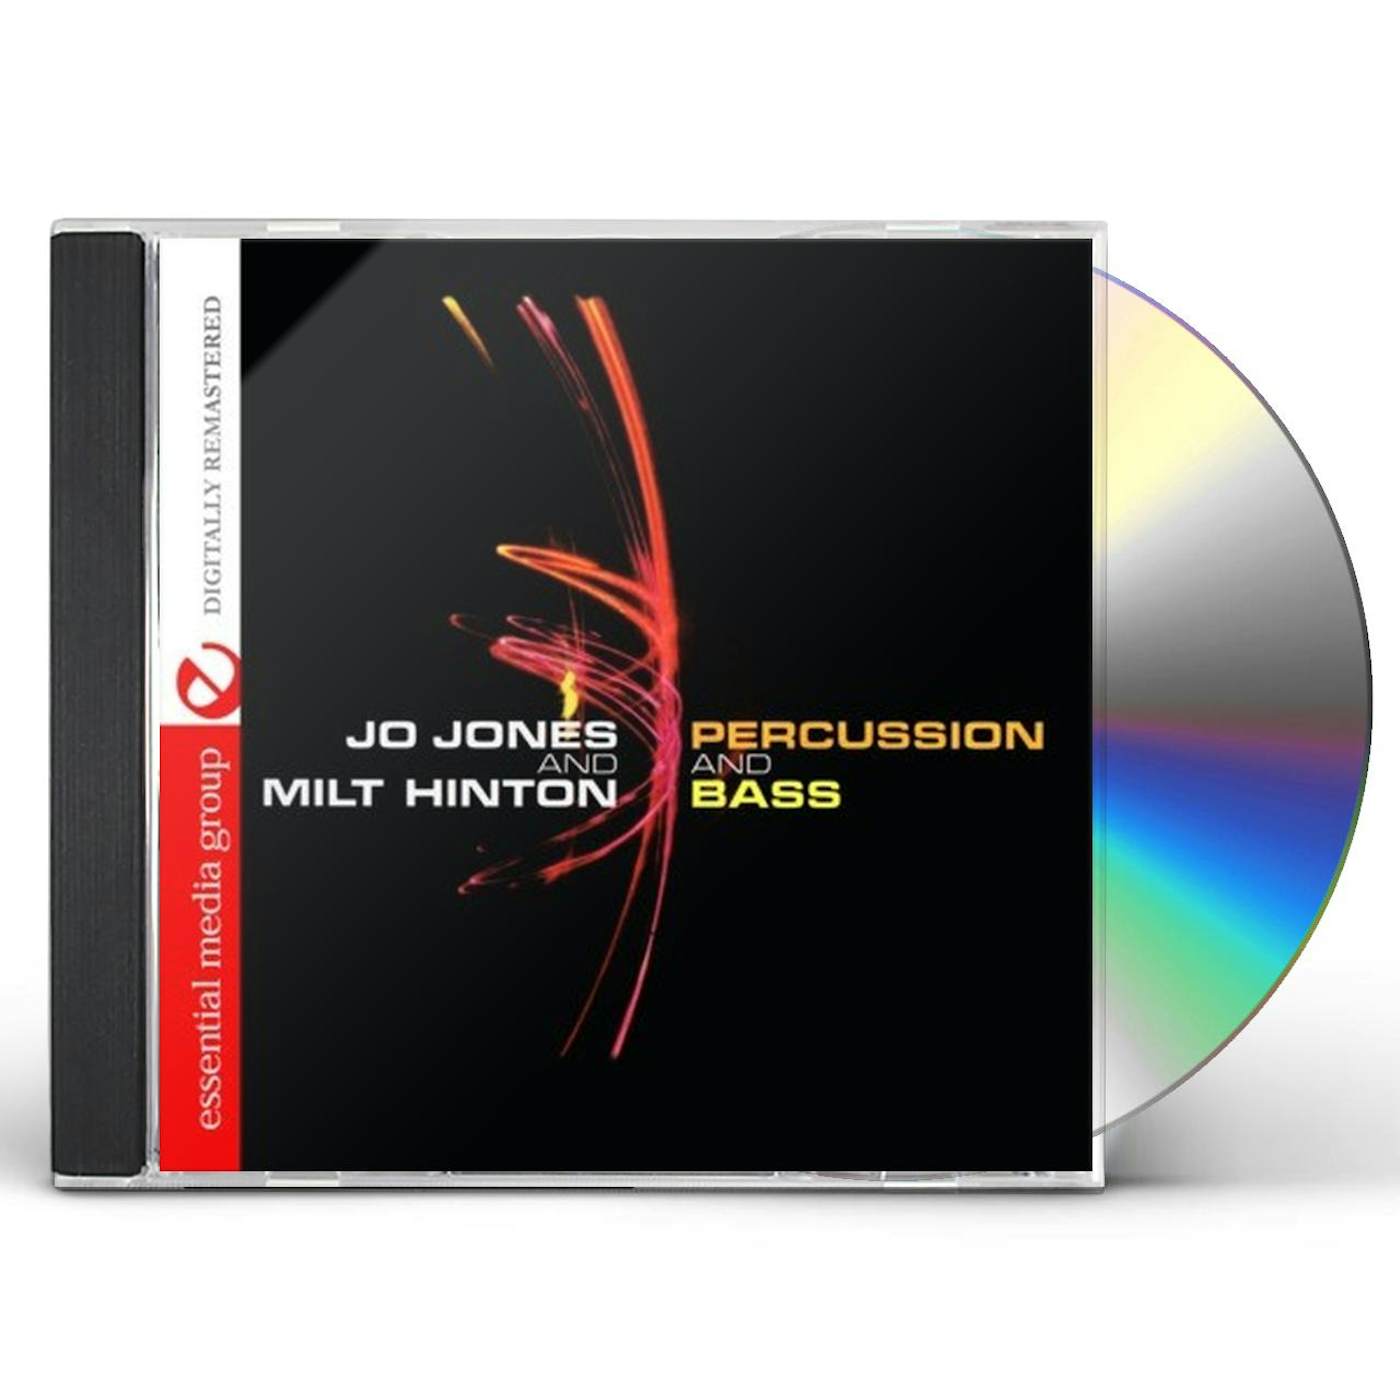 Jo Jones PERCUSSION AND BASS CD